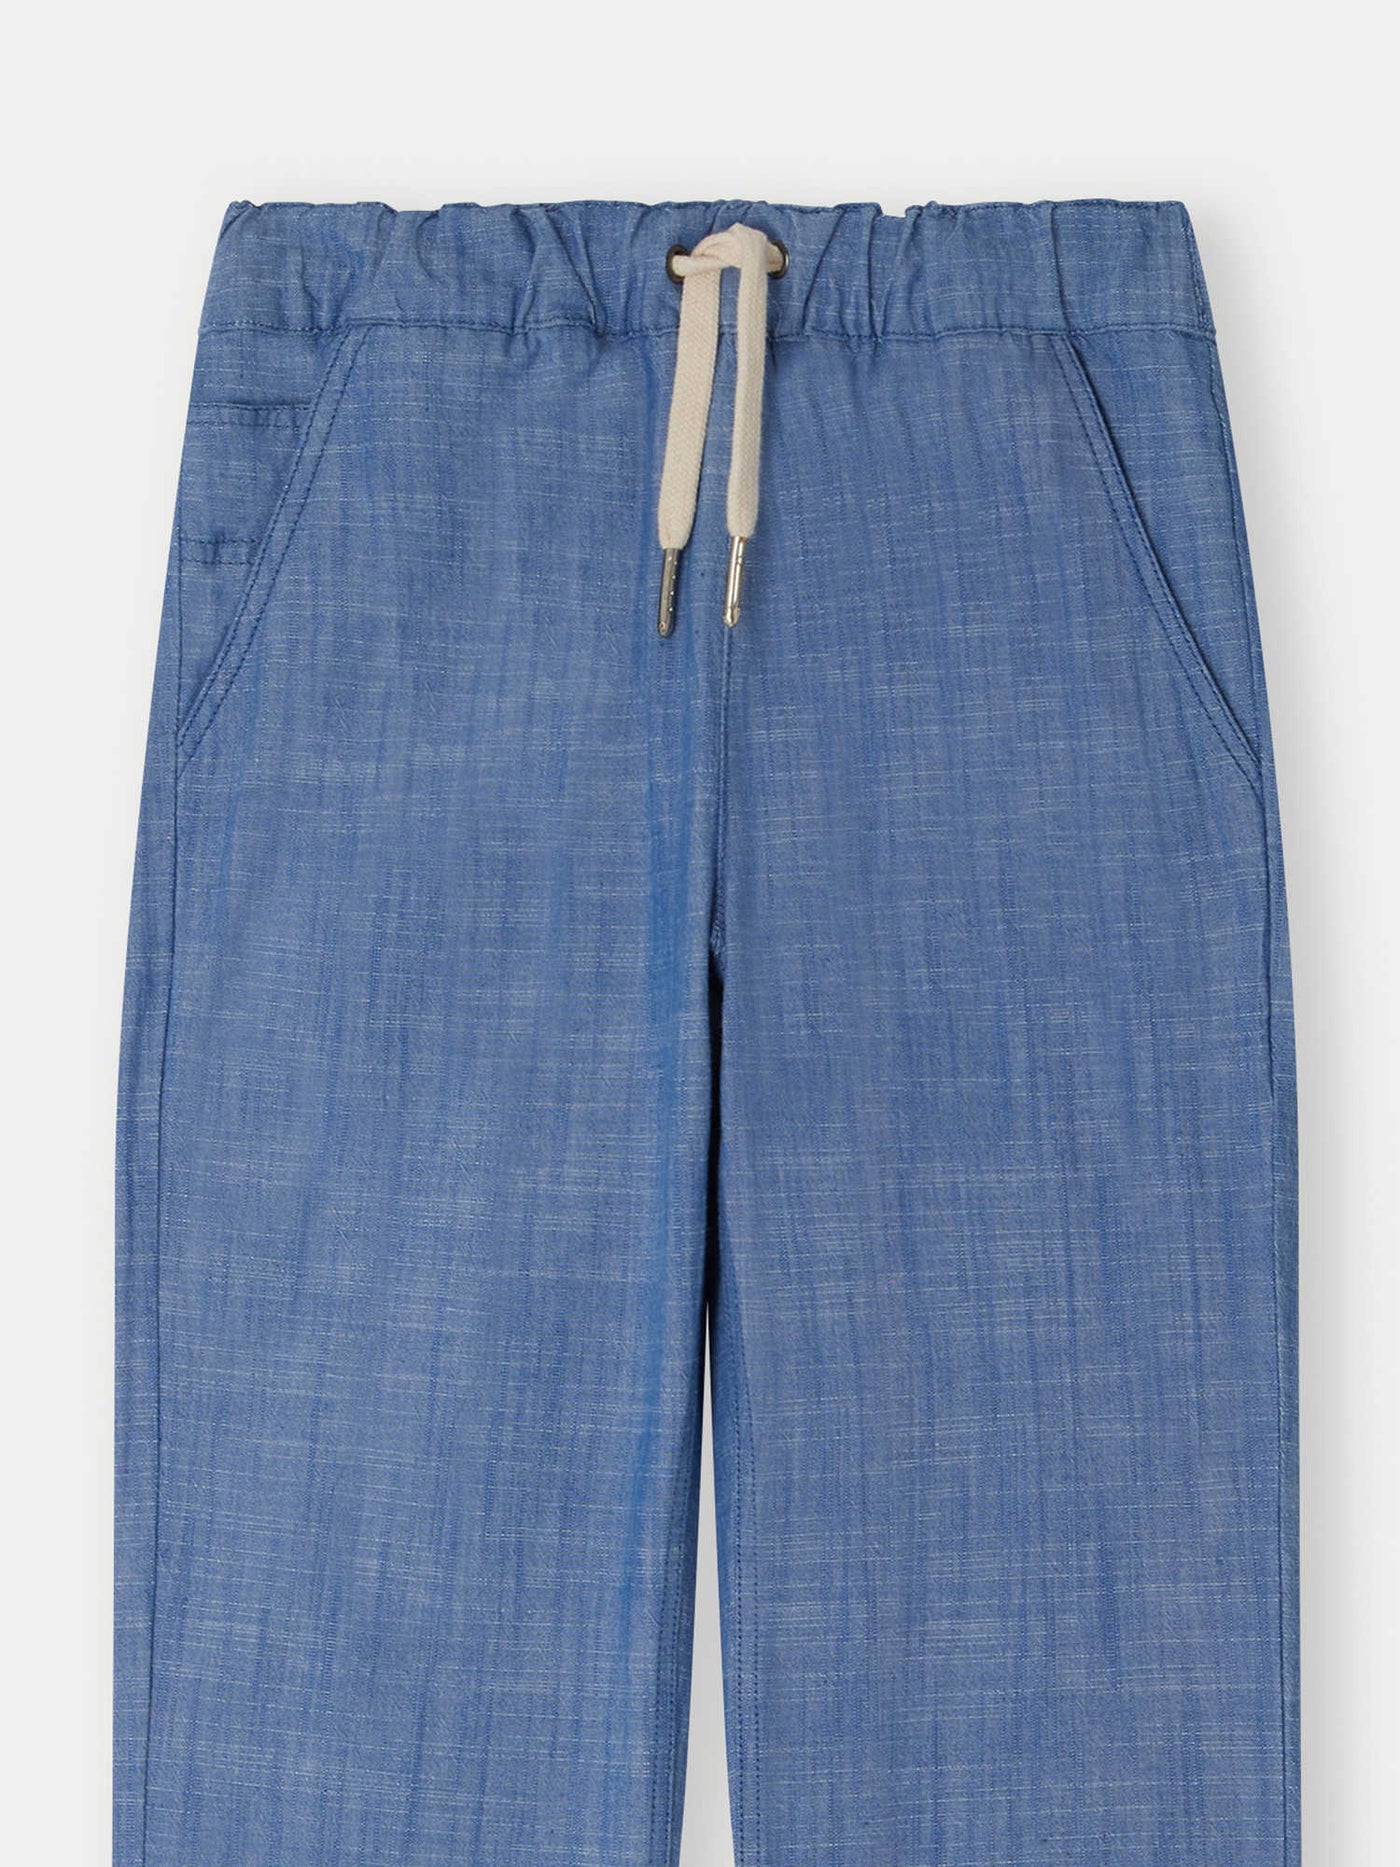 Connell Pants blue